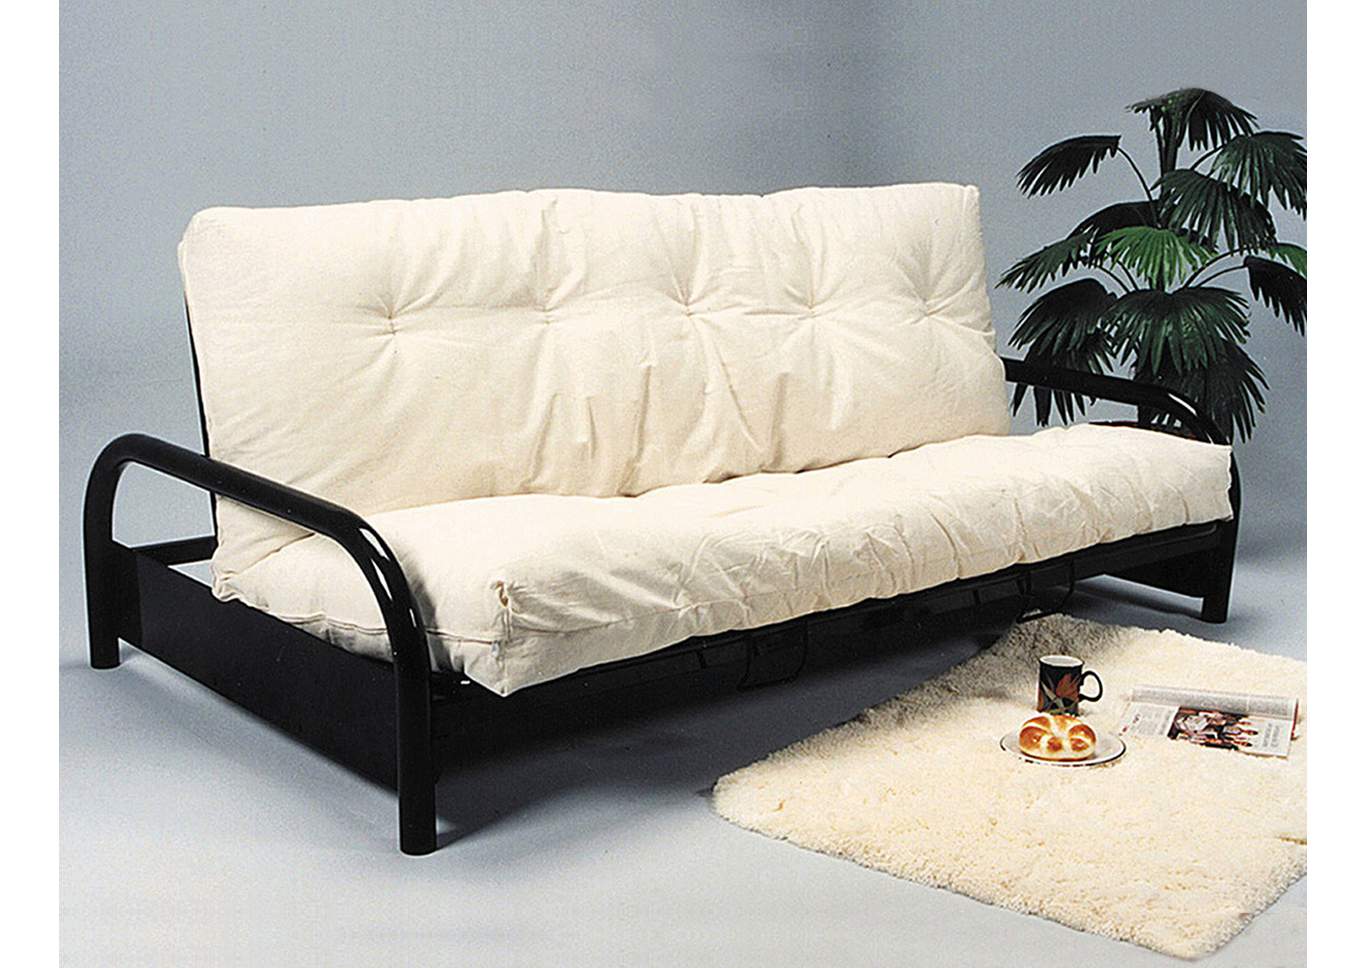 Comfortable Futon Sofa